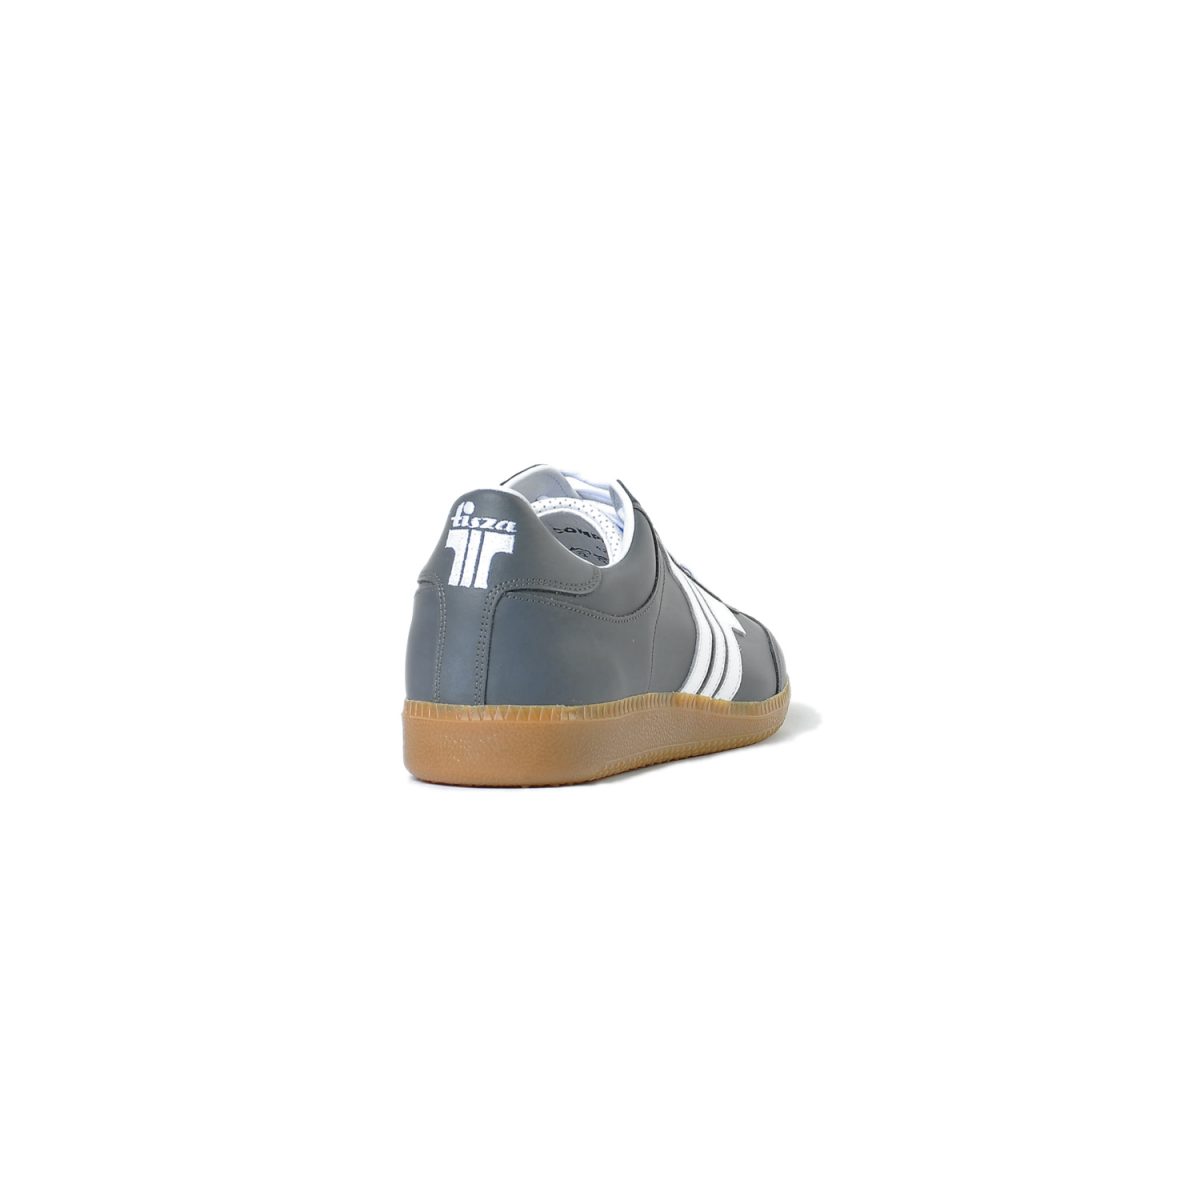 Tisza shoes - Compakt - Grey-white